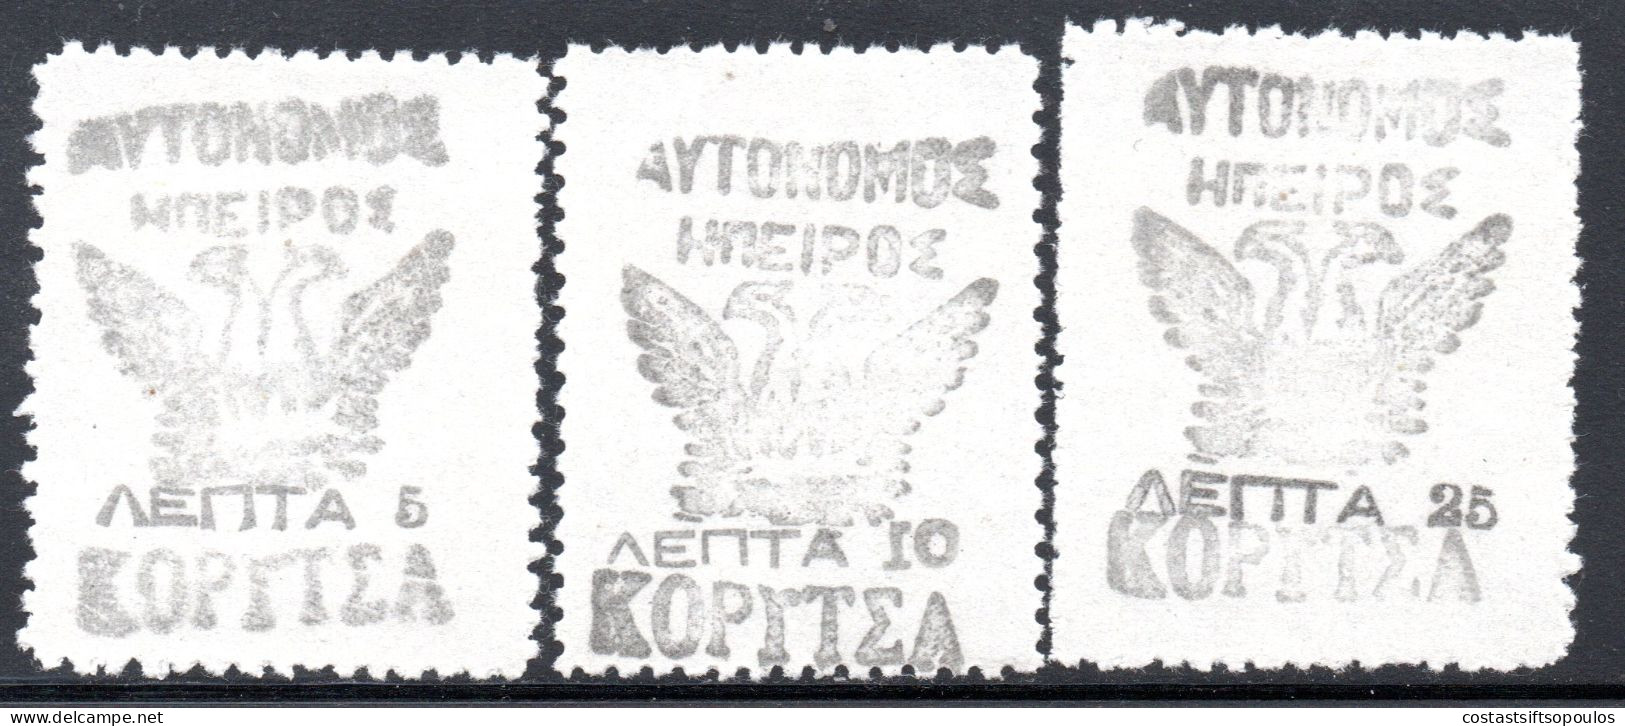 3033.GREECE,ALBANIA,NORTH EPIRUS.1914 KORYTSA UNOFFICIAL ISSUE,WITHOUT GUM AS ISSUED - Epirus & Albania